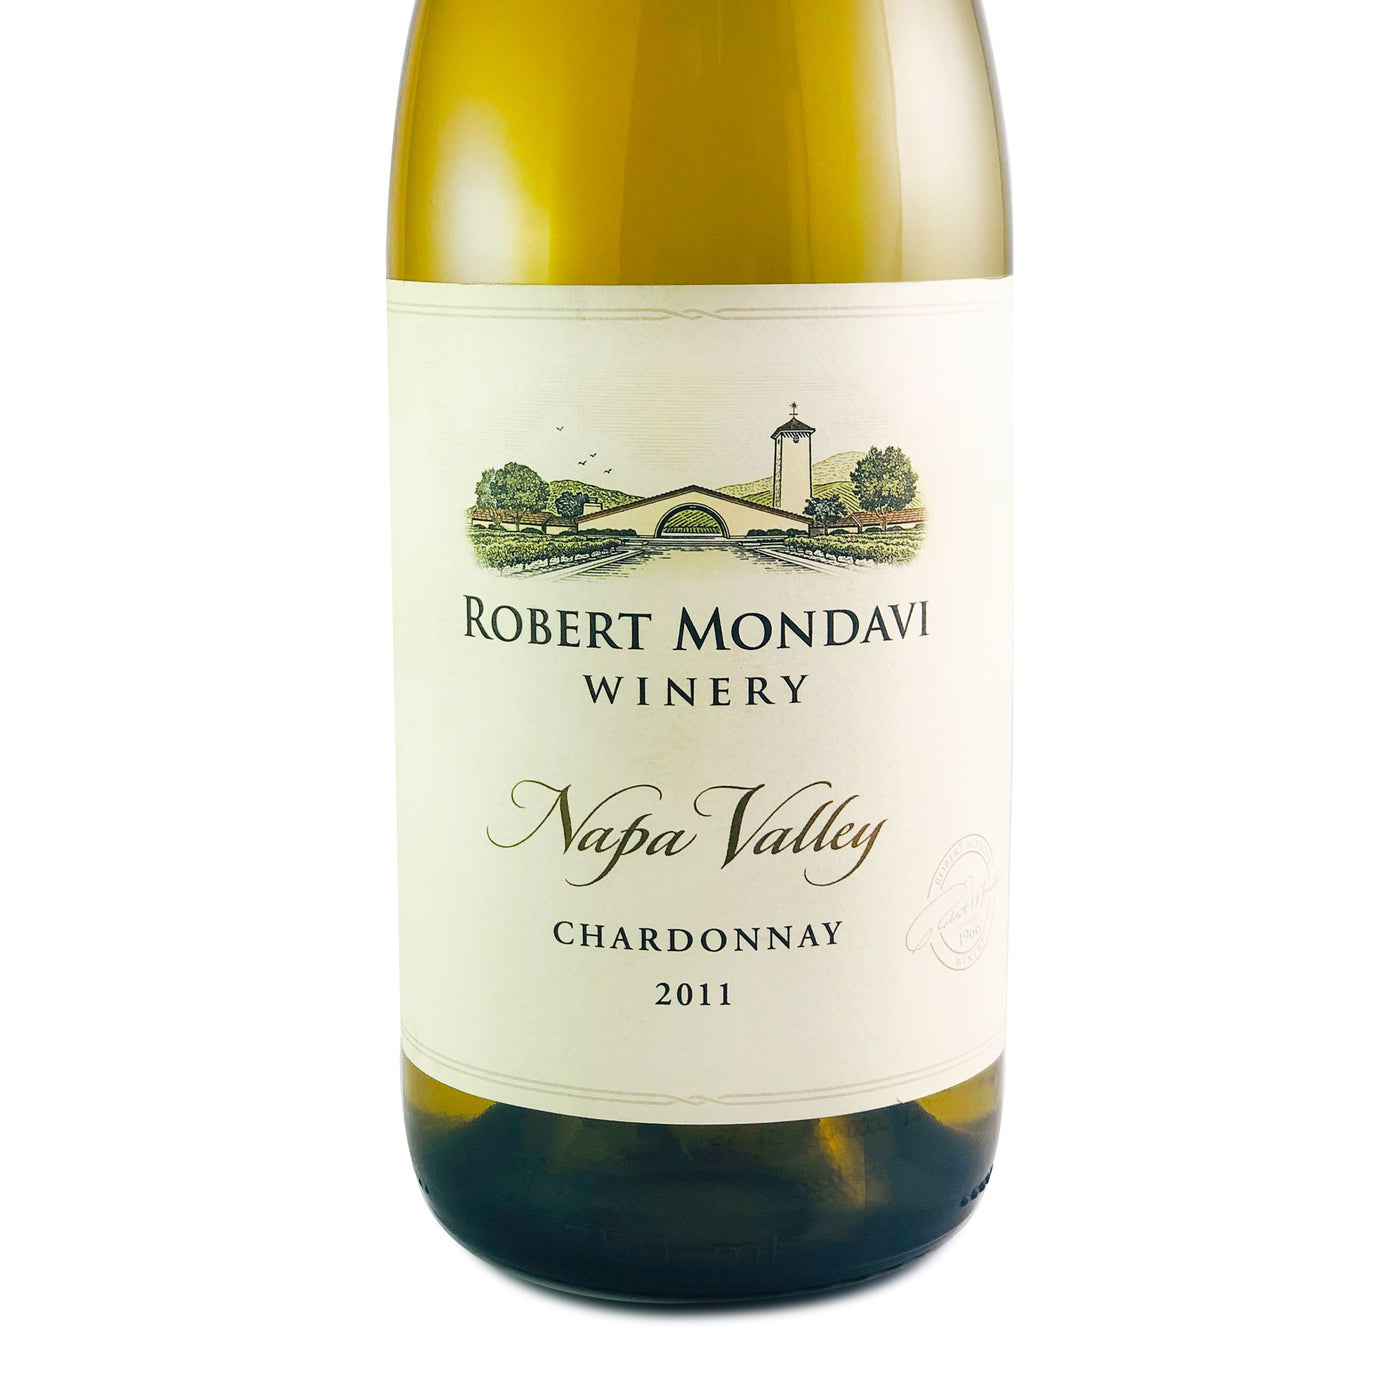 Robert Mondavi Napa Valley Chardonnay 2011